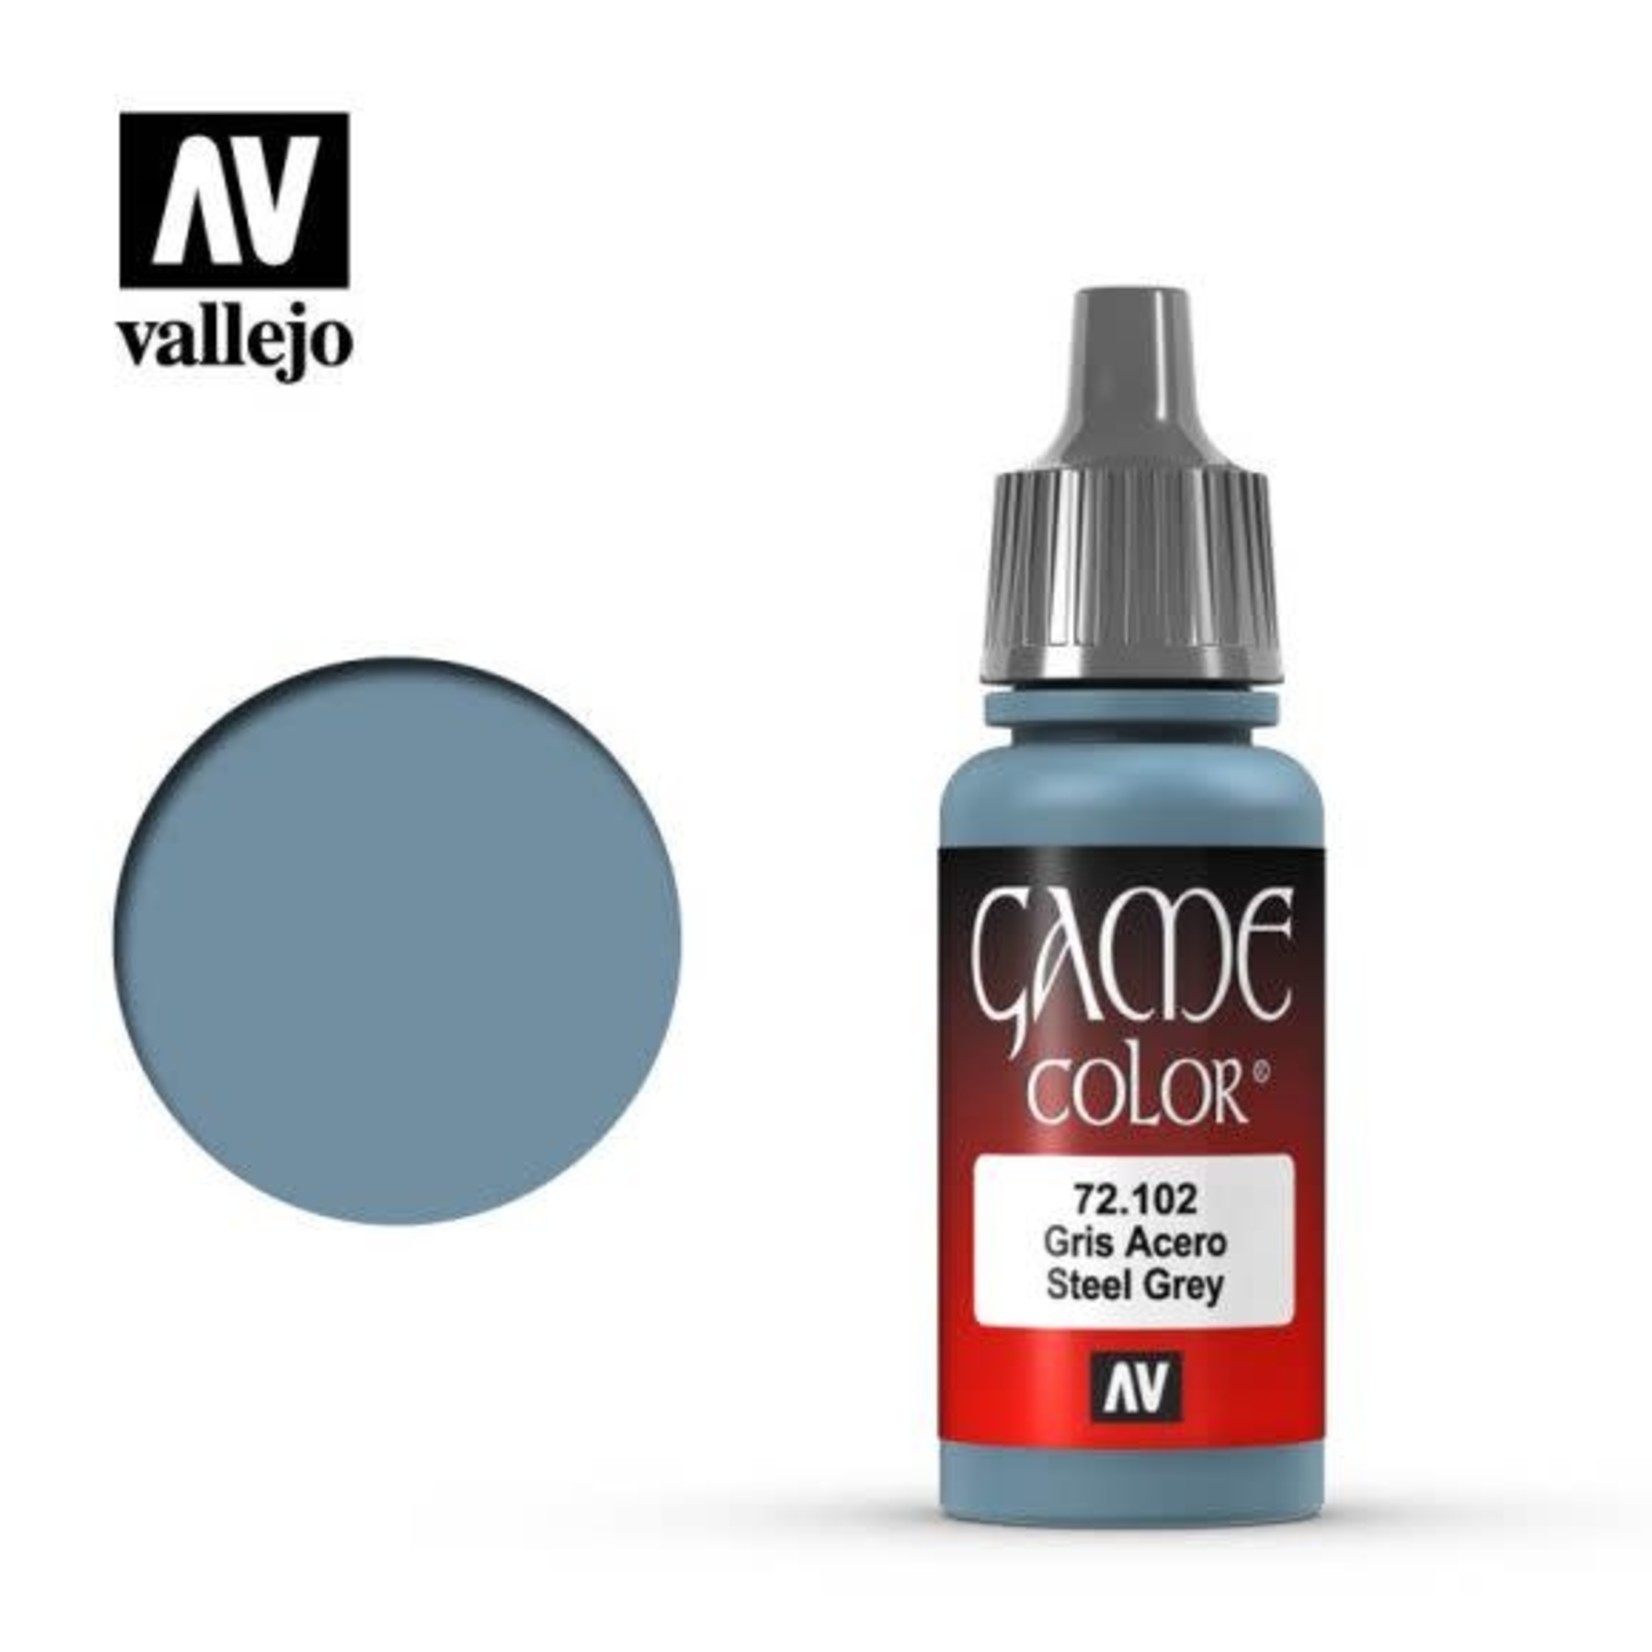 Vallejo Vallejo Game Color Paint: Steel Grey 72.102